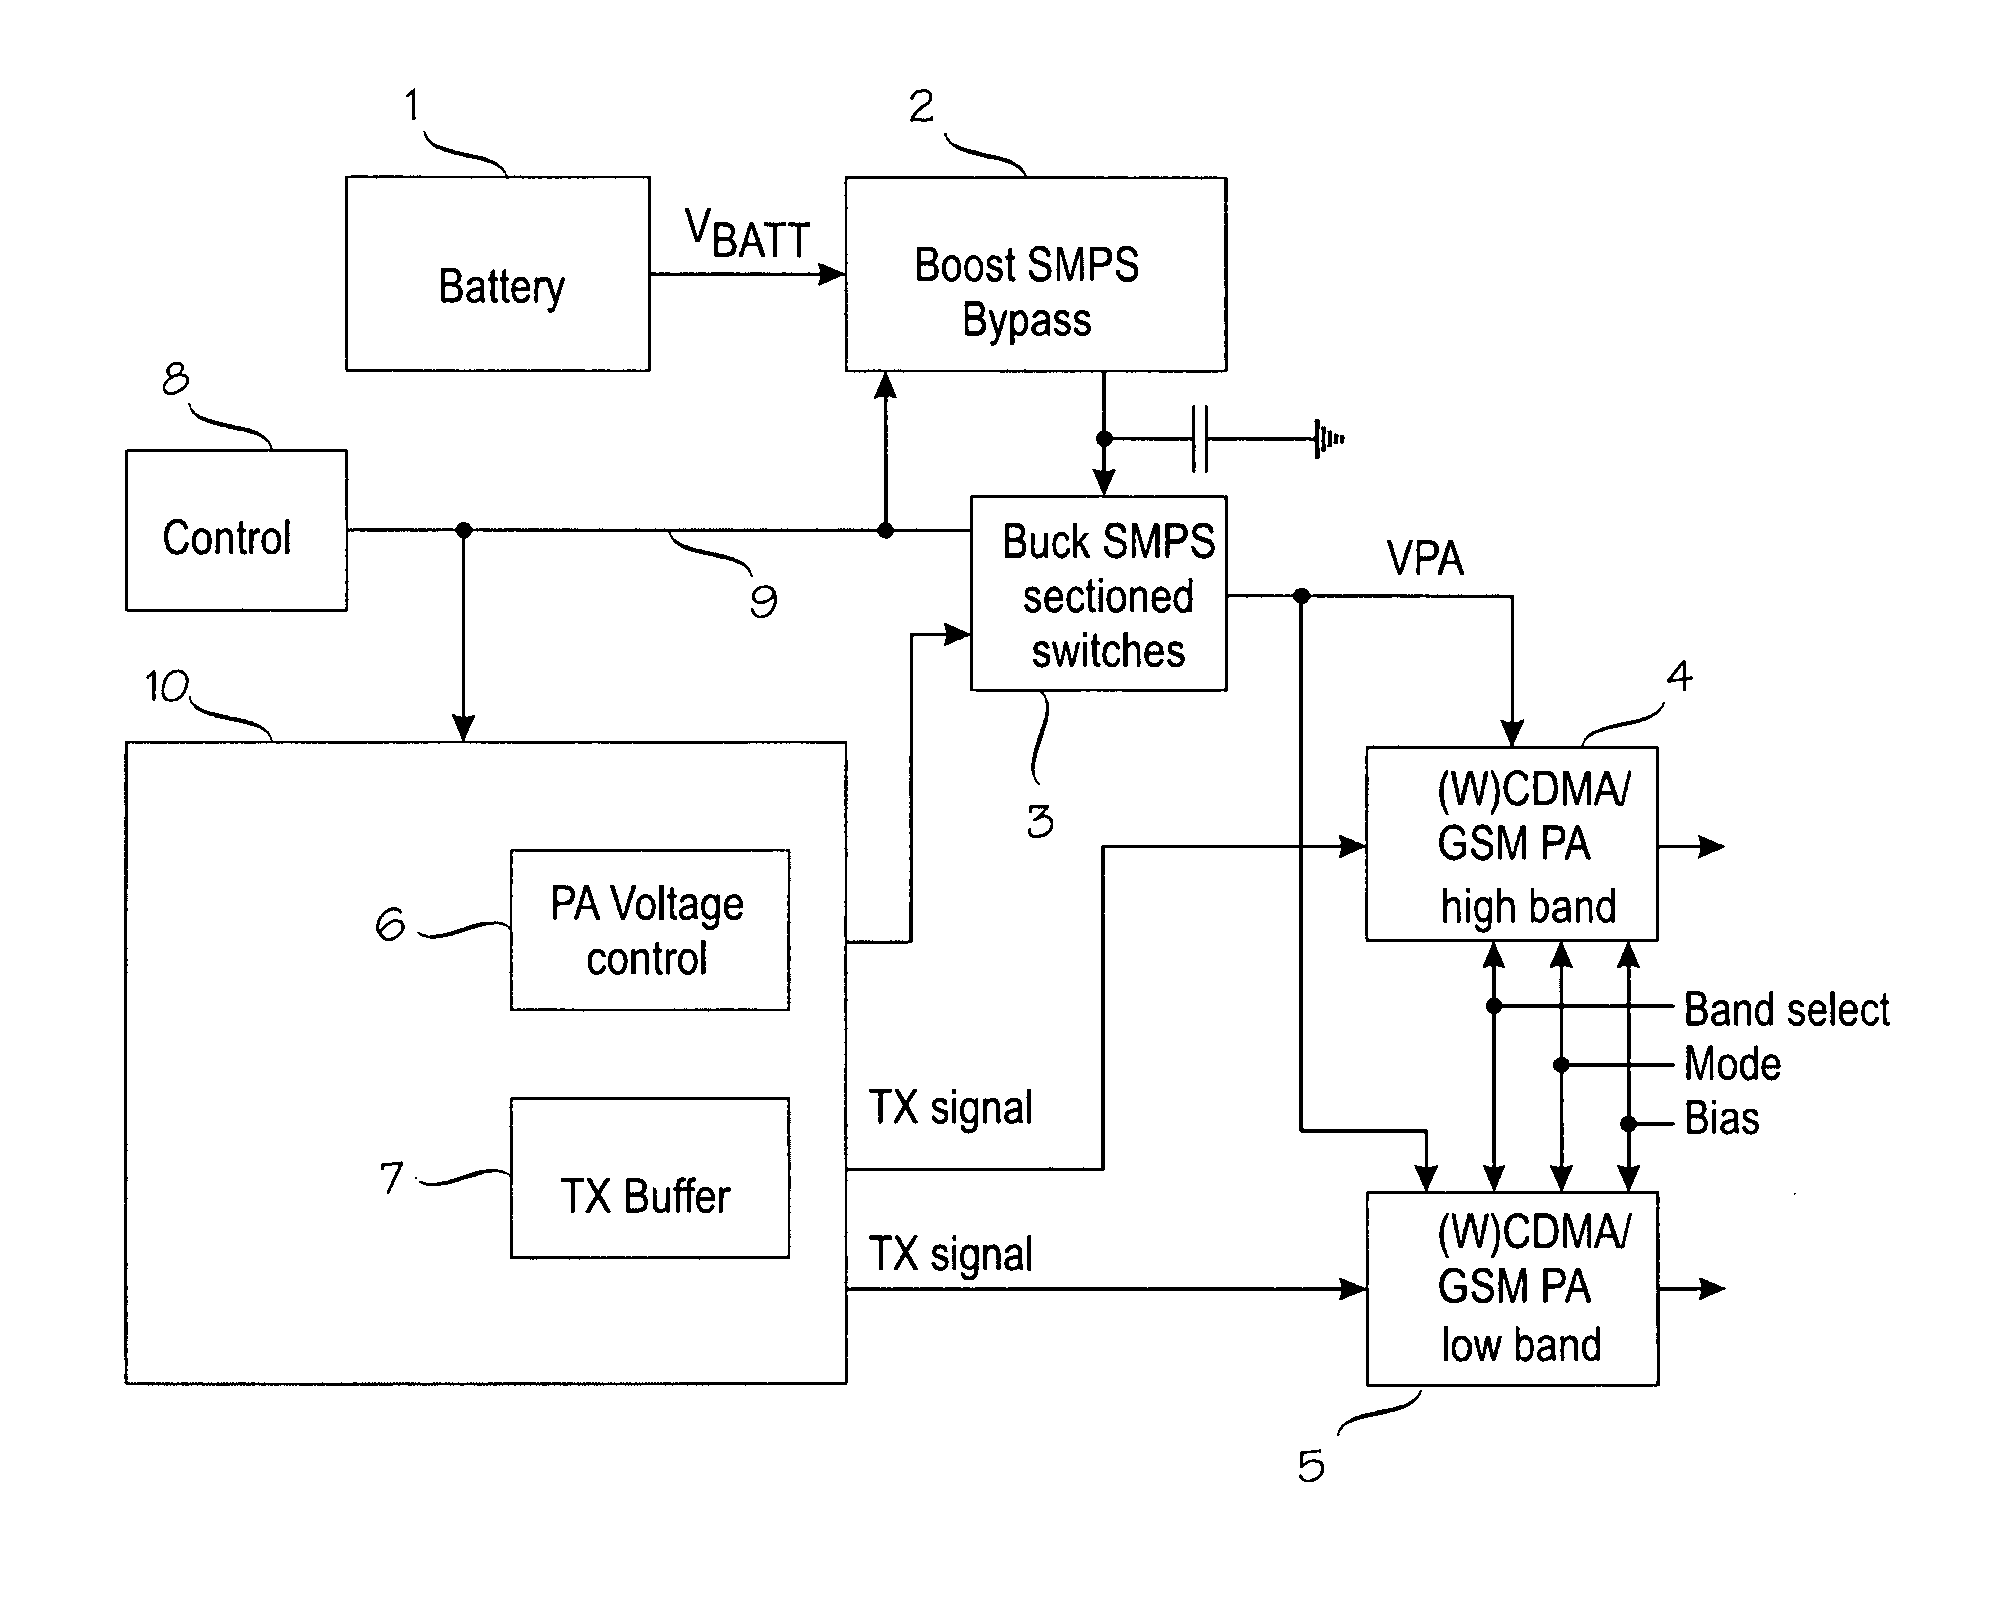 Power supplies for RF power amplifier